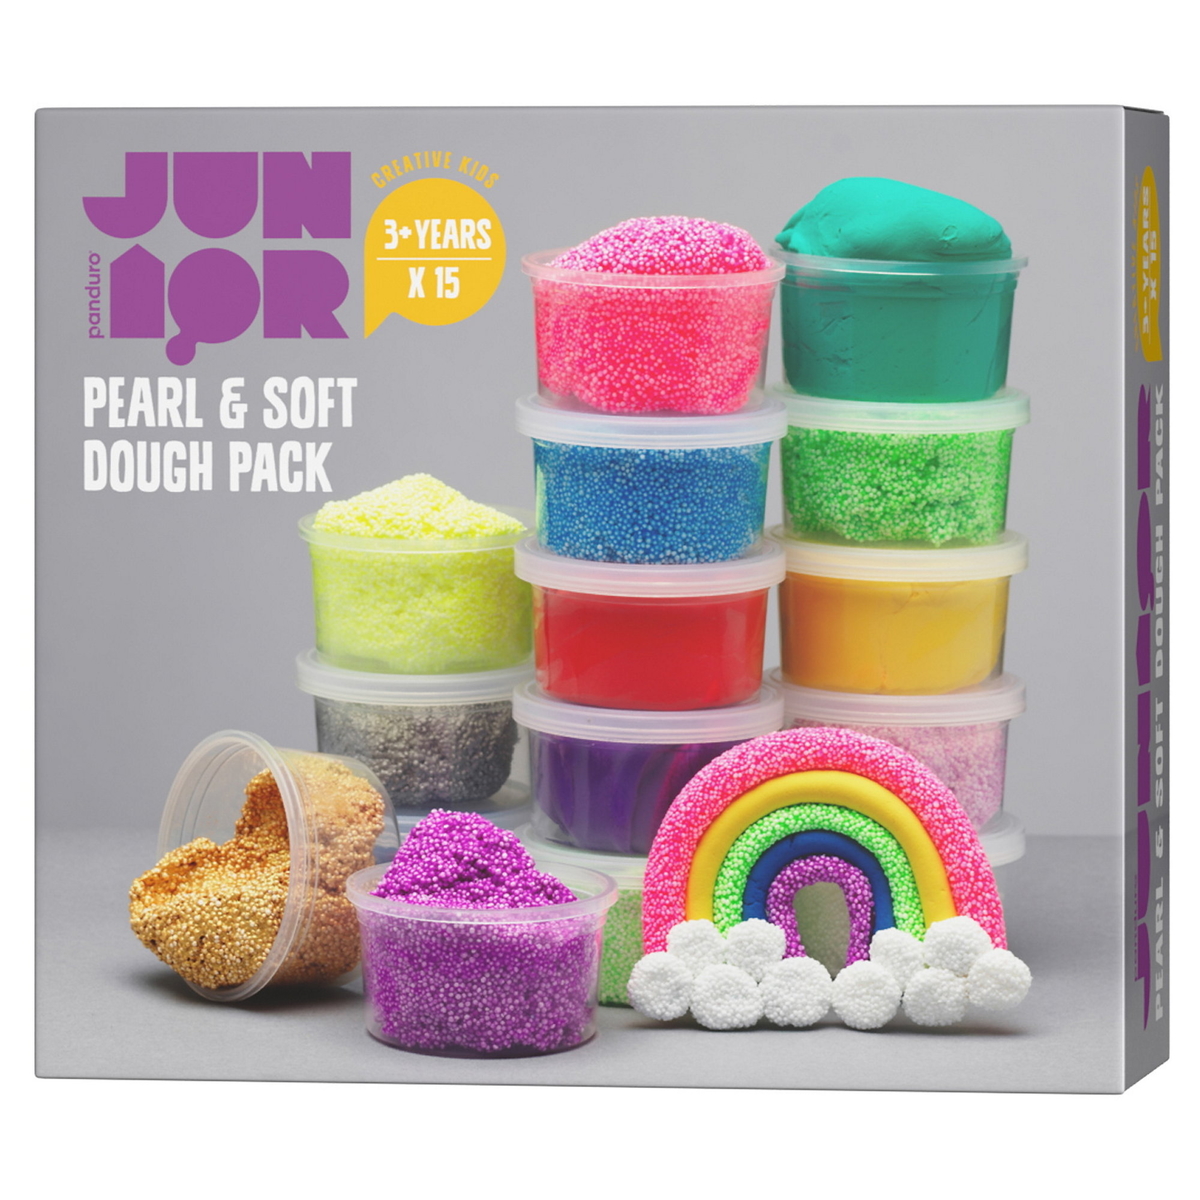 Pearl & Soft Dough – 15 ler 28 gram